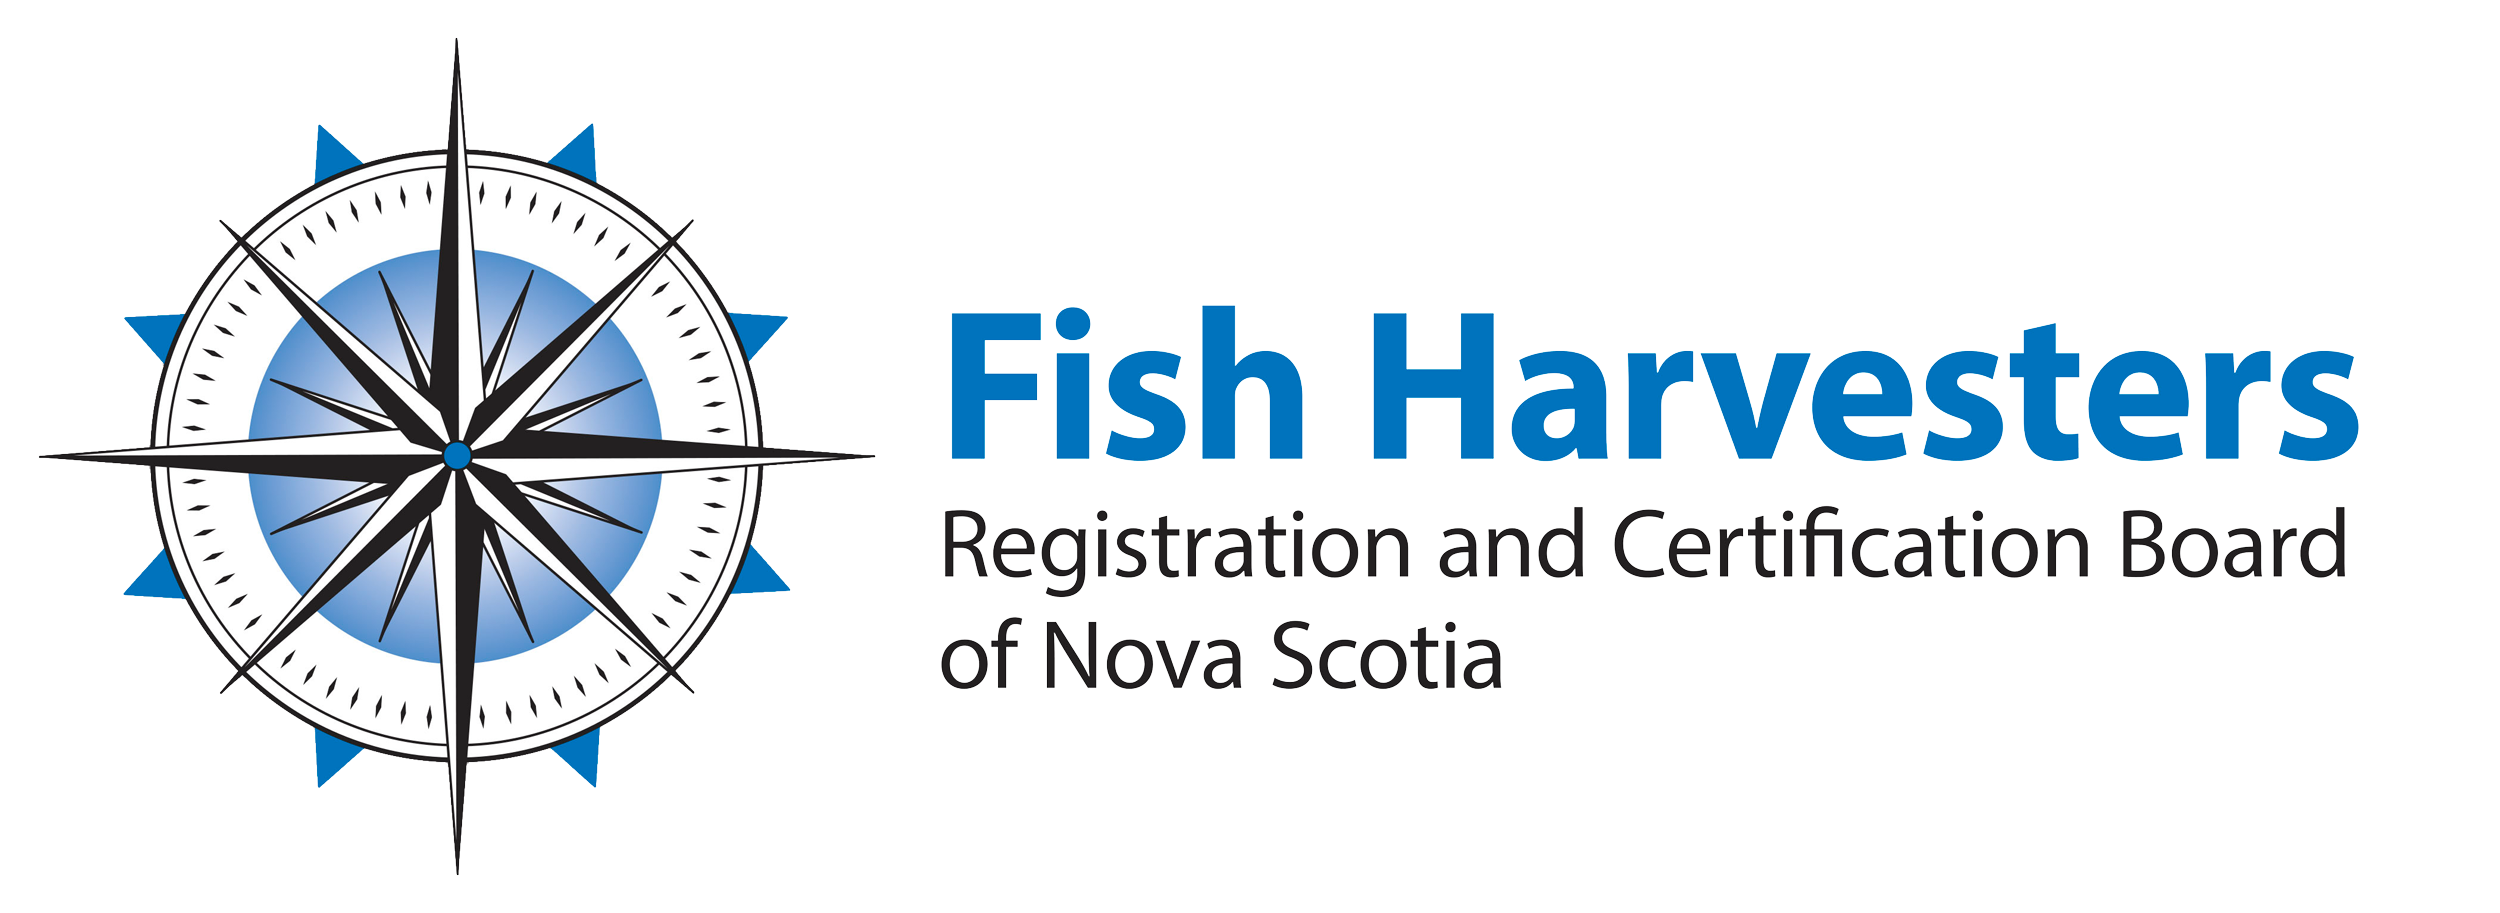 Fish Harvesters Registration and Certification Board of Nova Scotia